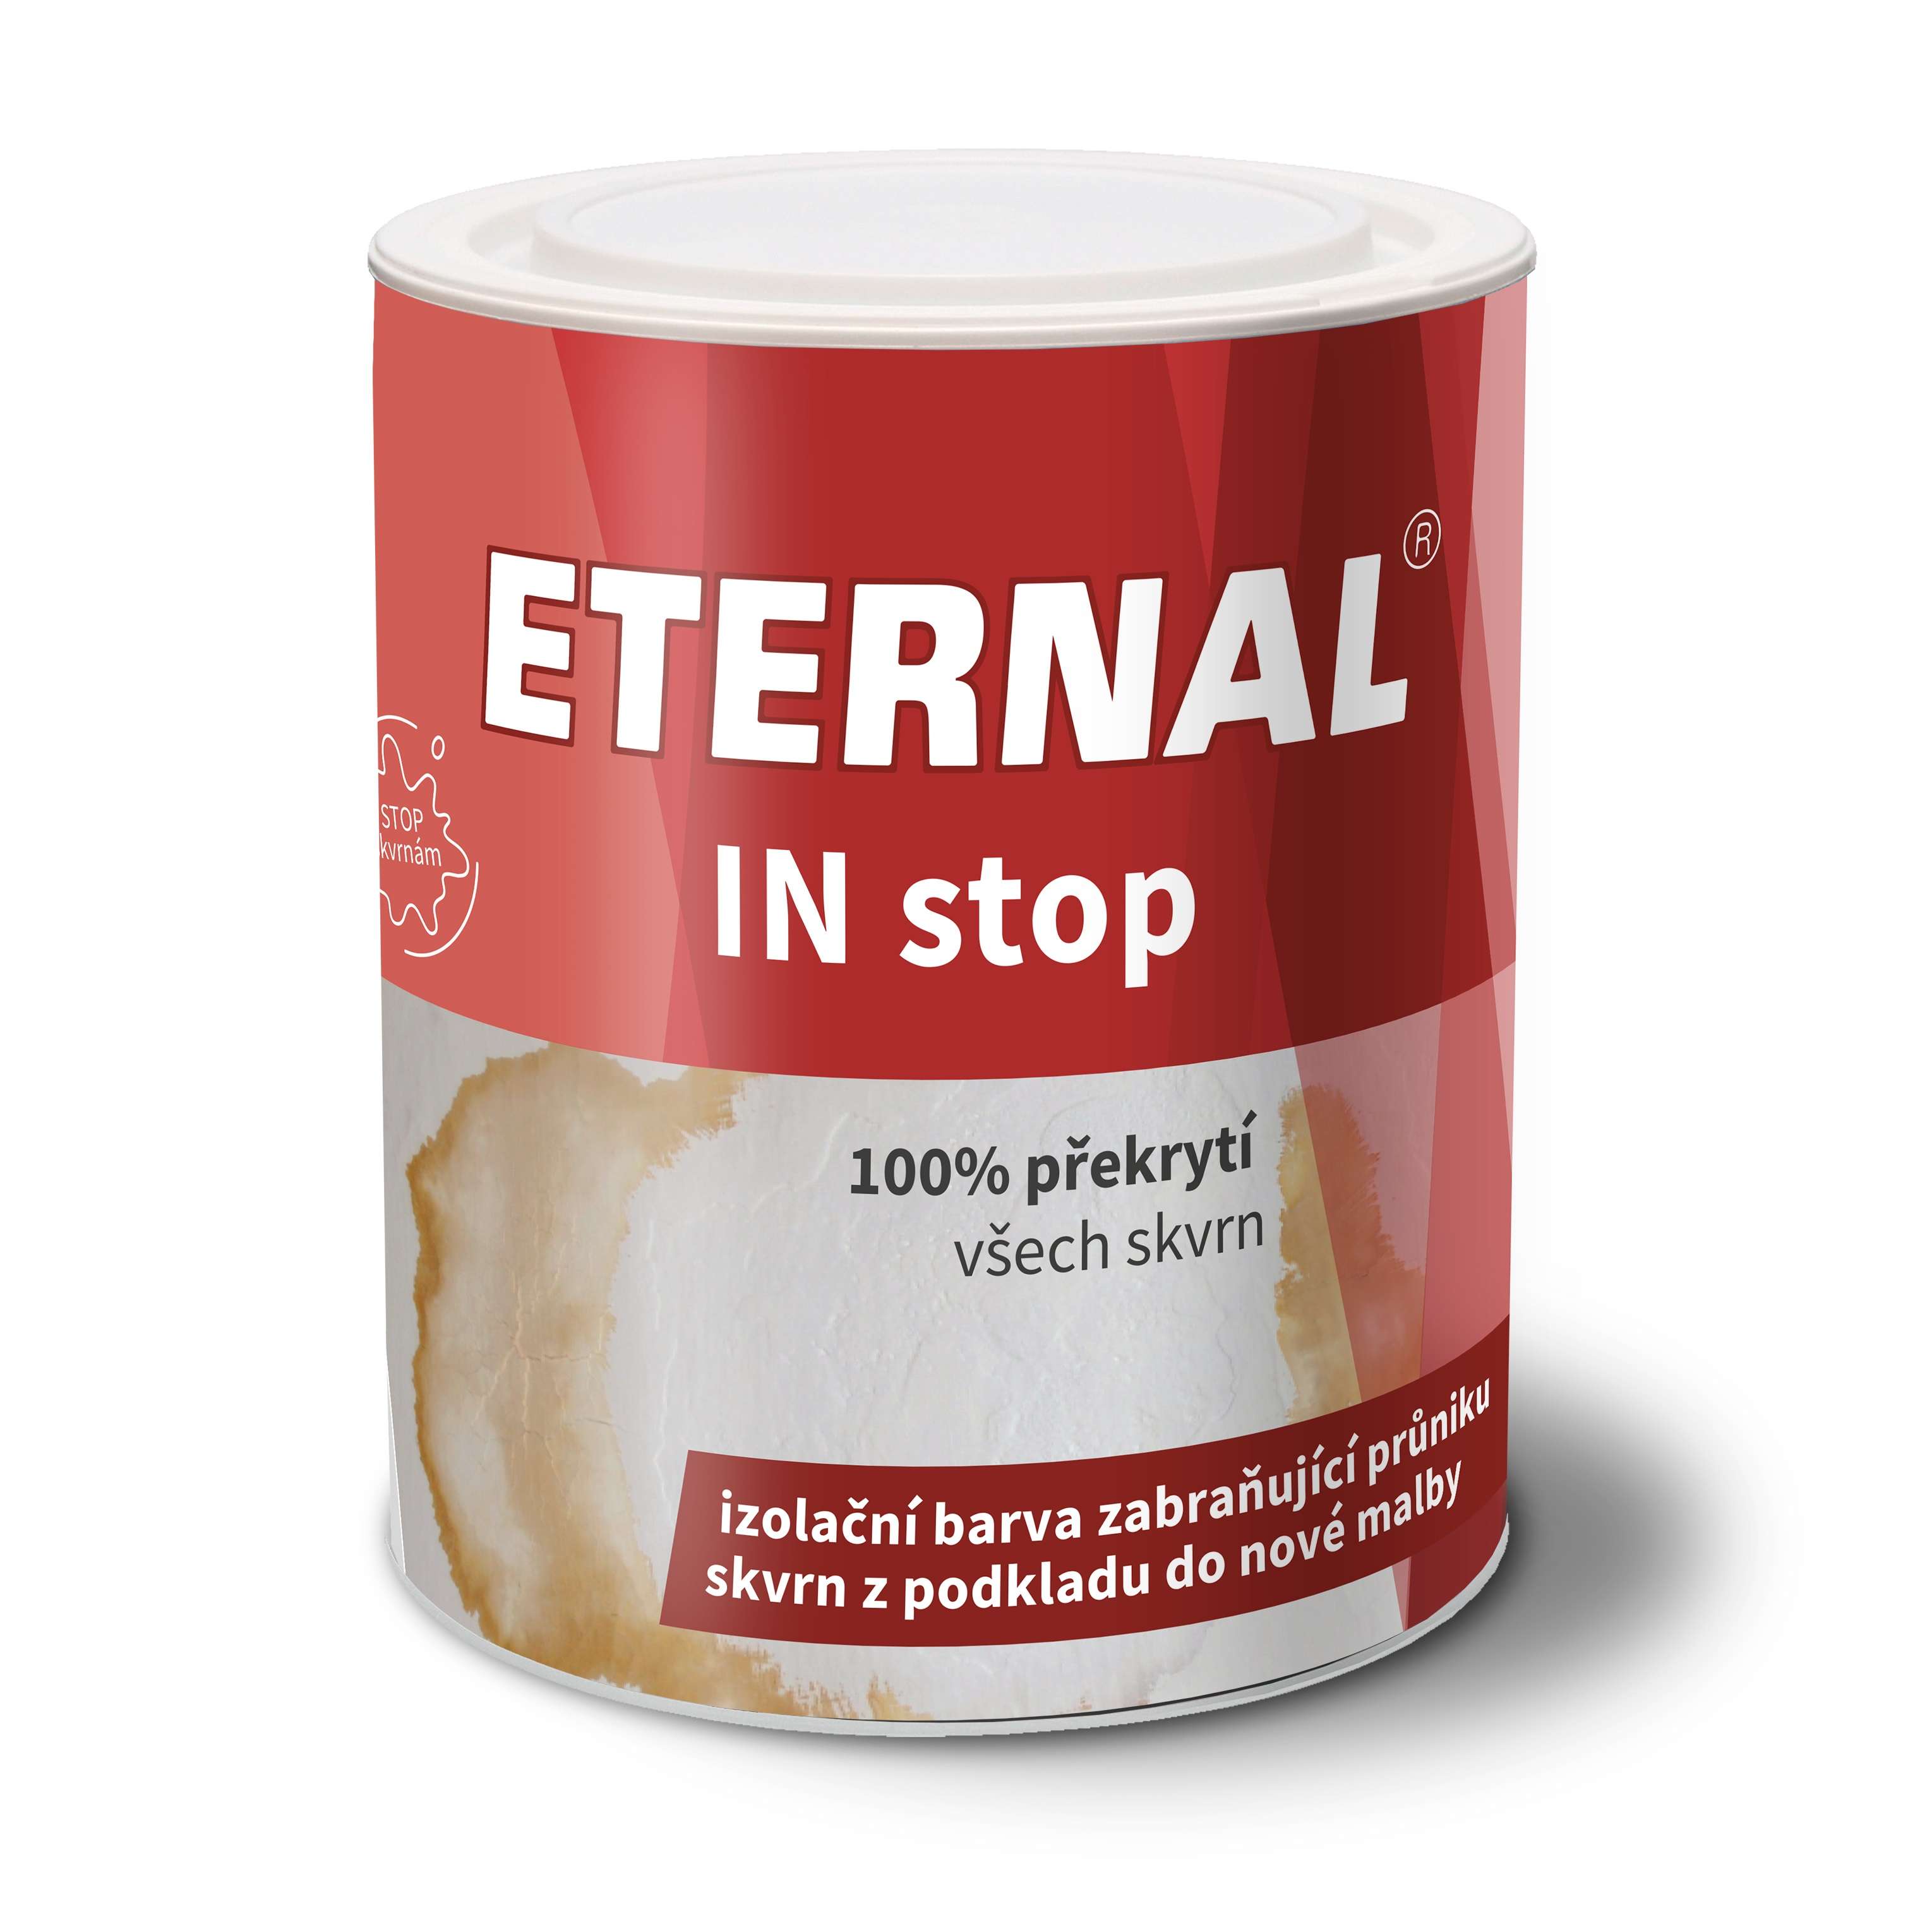 Eternal In stop 1